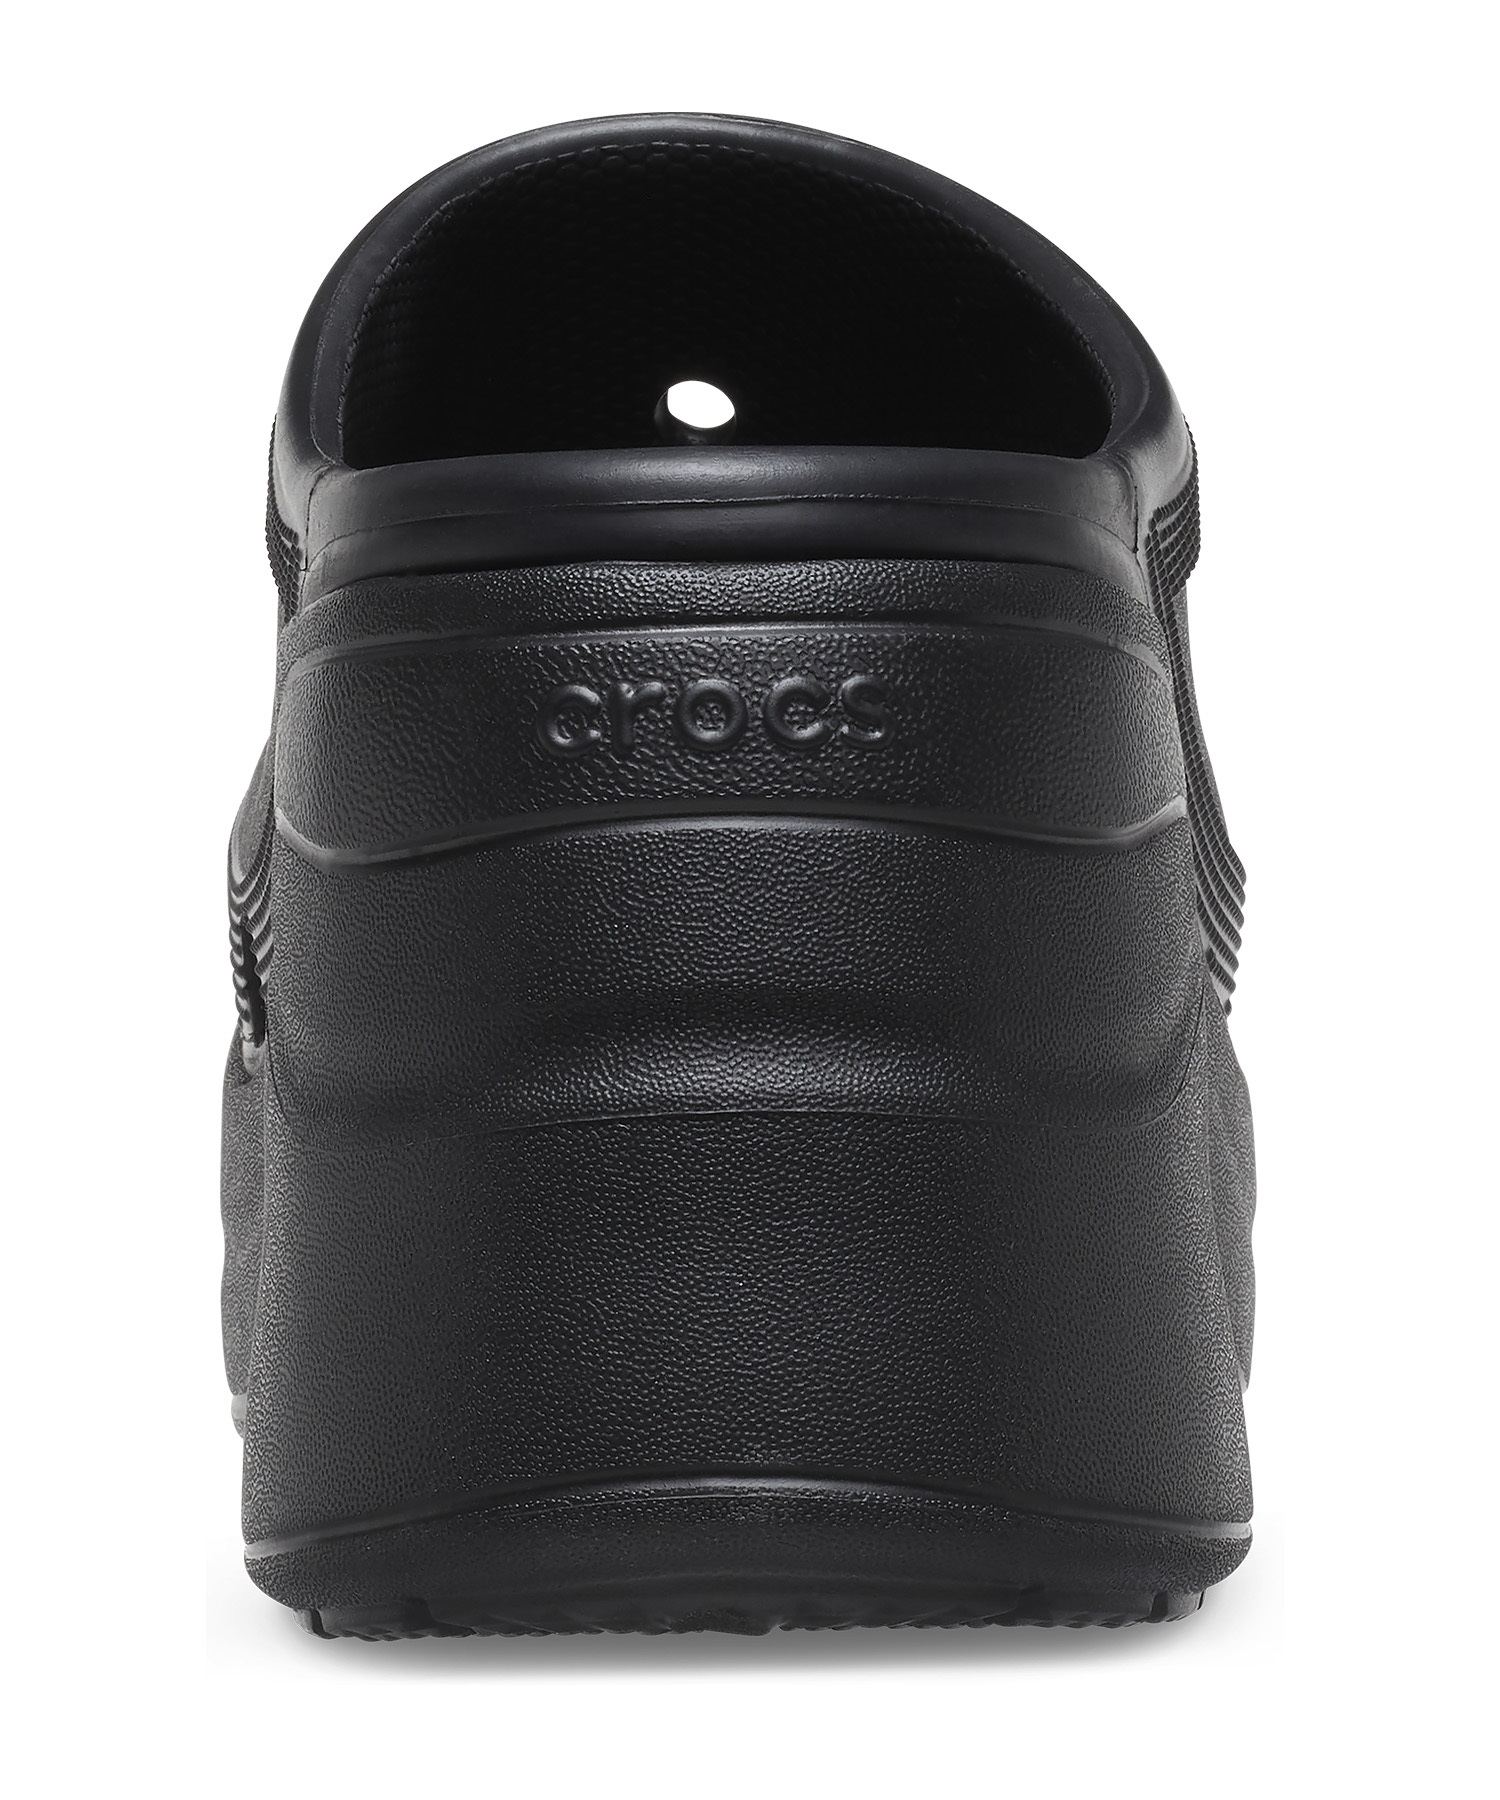 CROCS クロックス SIREN CLOG サイレン クロッグ レディース シューズ 厚底 サンダル ミュール 208547-001 Black(BLACK-22.0cm)